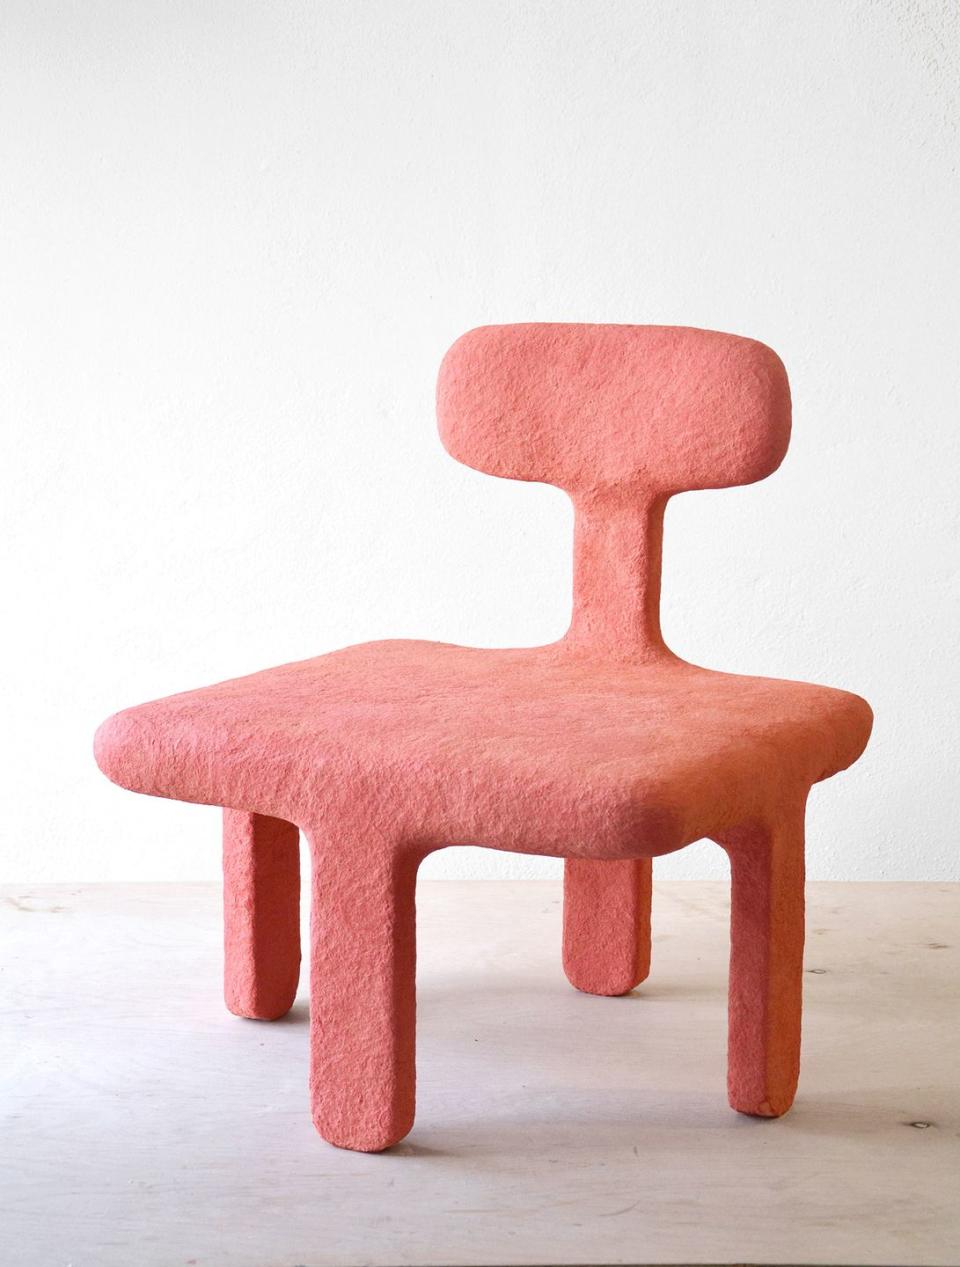 5) Flo chair by Polina Miliou